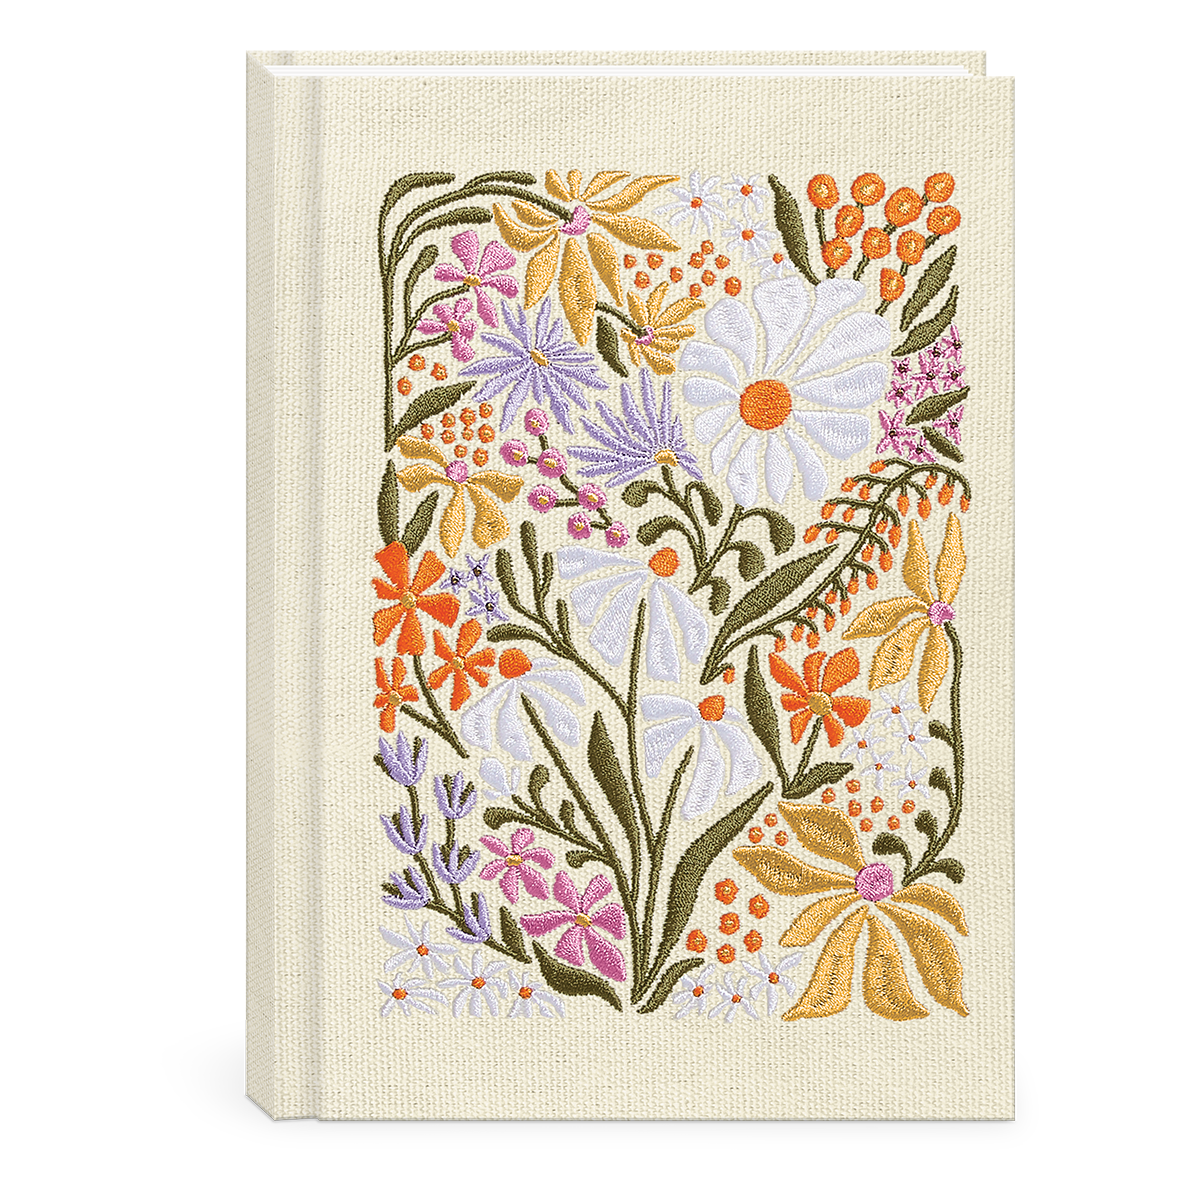 Flower Market Wildflowers Fabric Journal Product